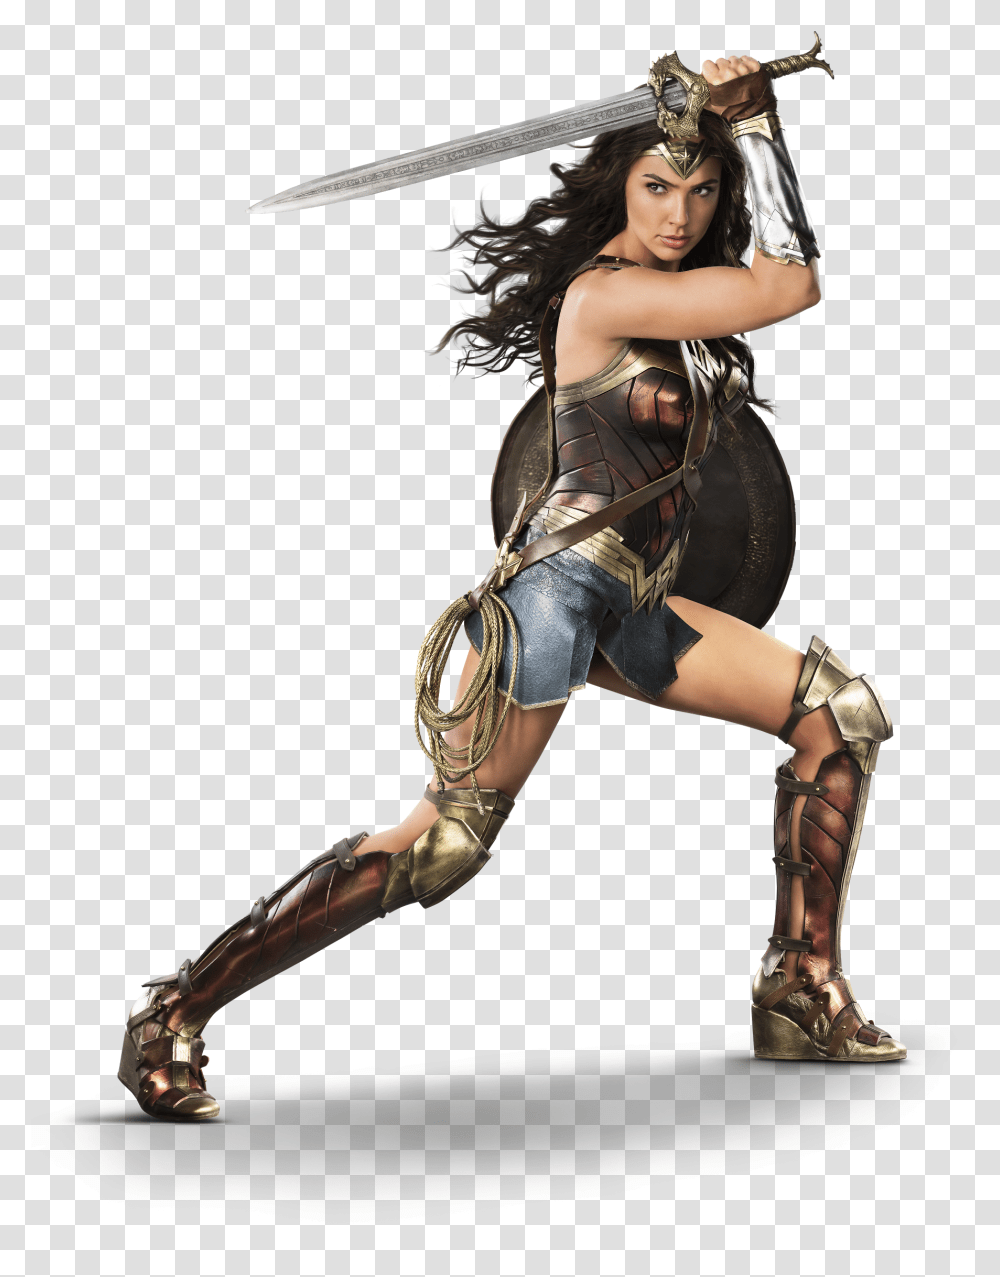 Gal Gadot Download Gal Gadot Wonder Woman Sword, Person, Human, Leisure Activities, Dance Pose Transparent Png